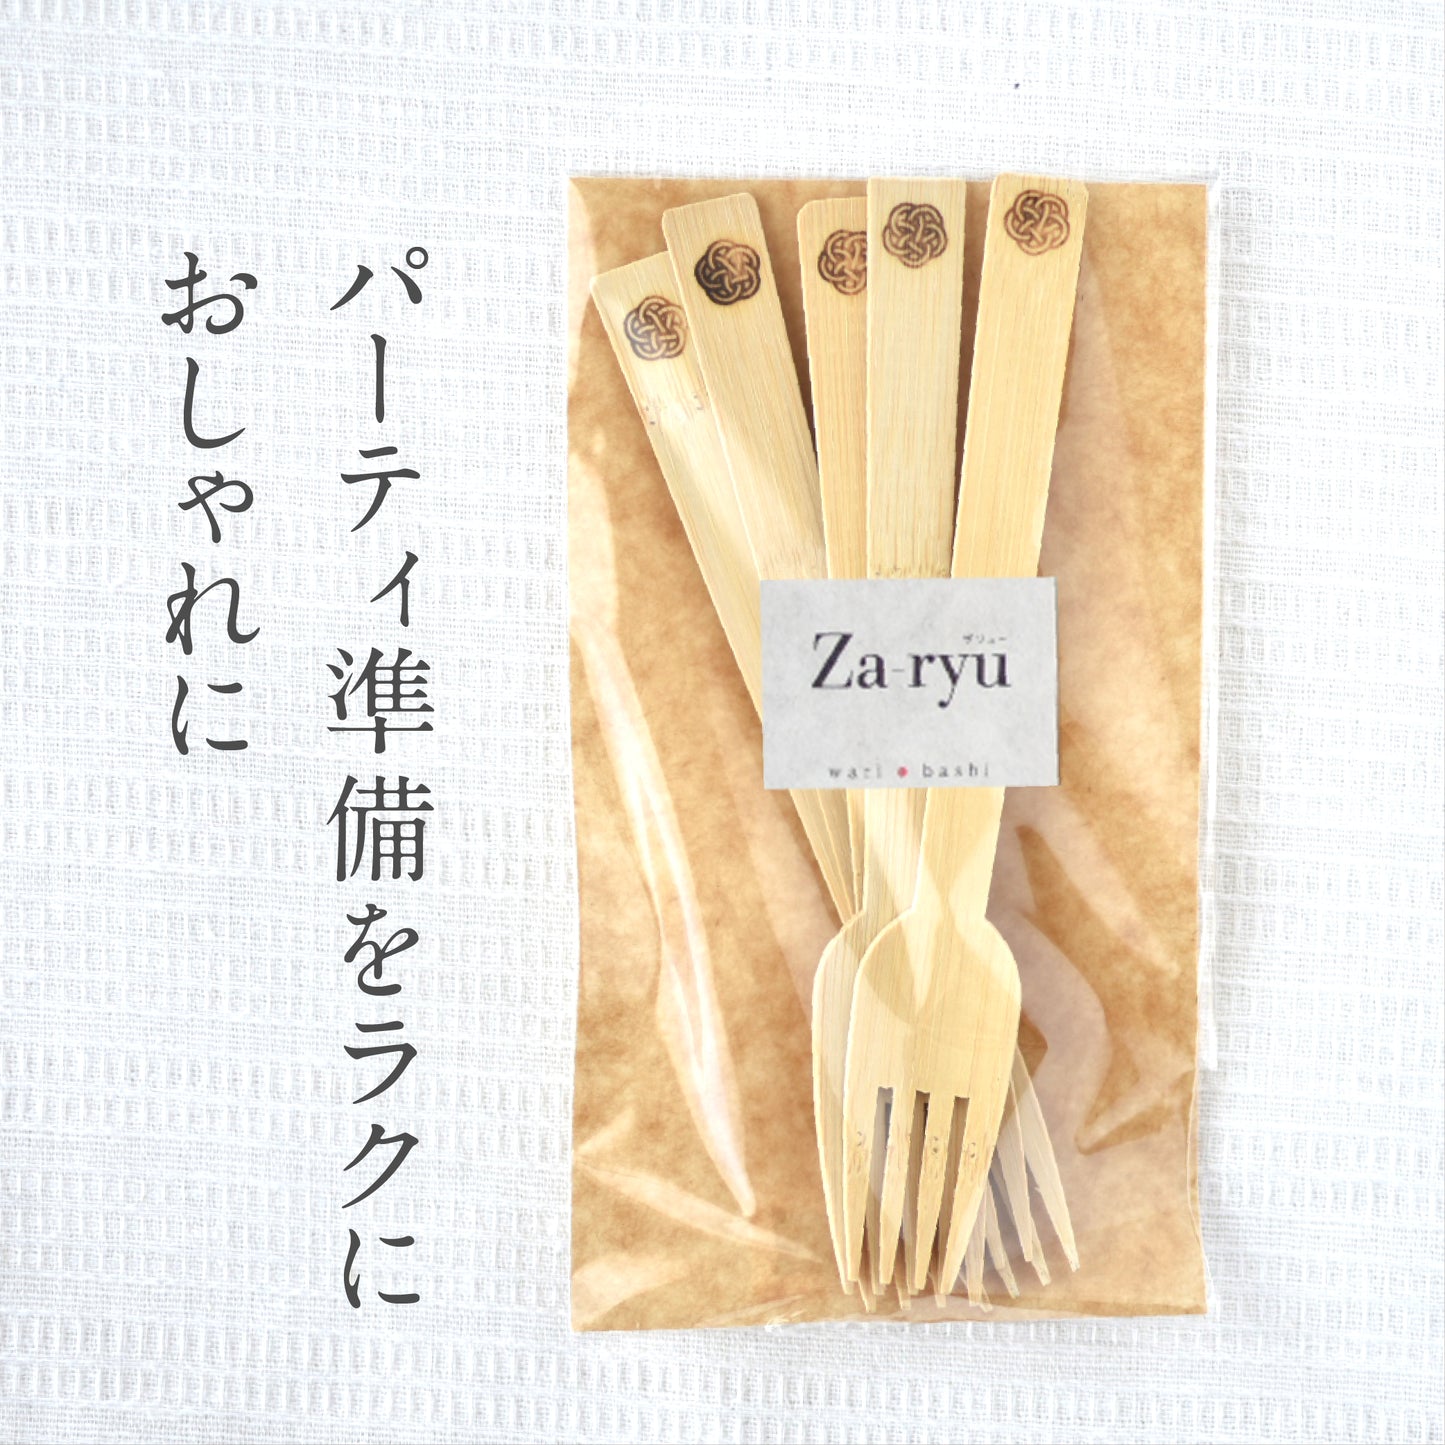 zaryu（ザリュー）おしゃれな竹使い捨てフォーク【送料250円可能】